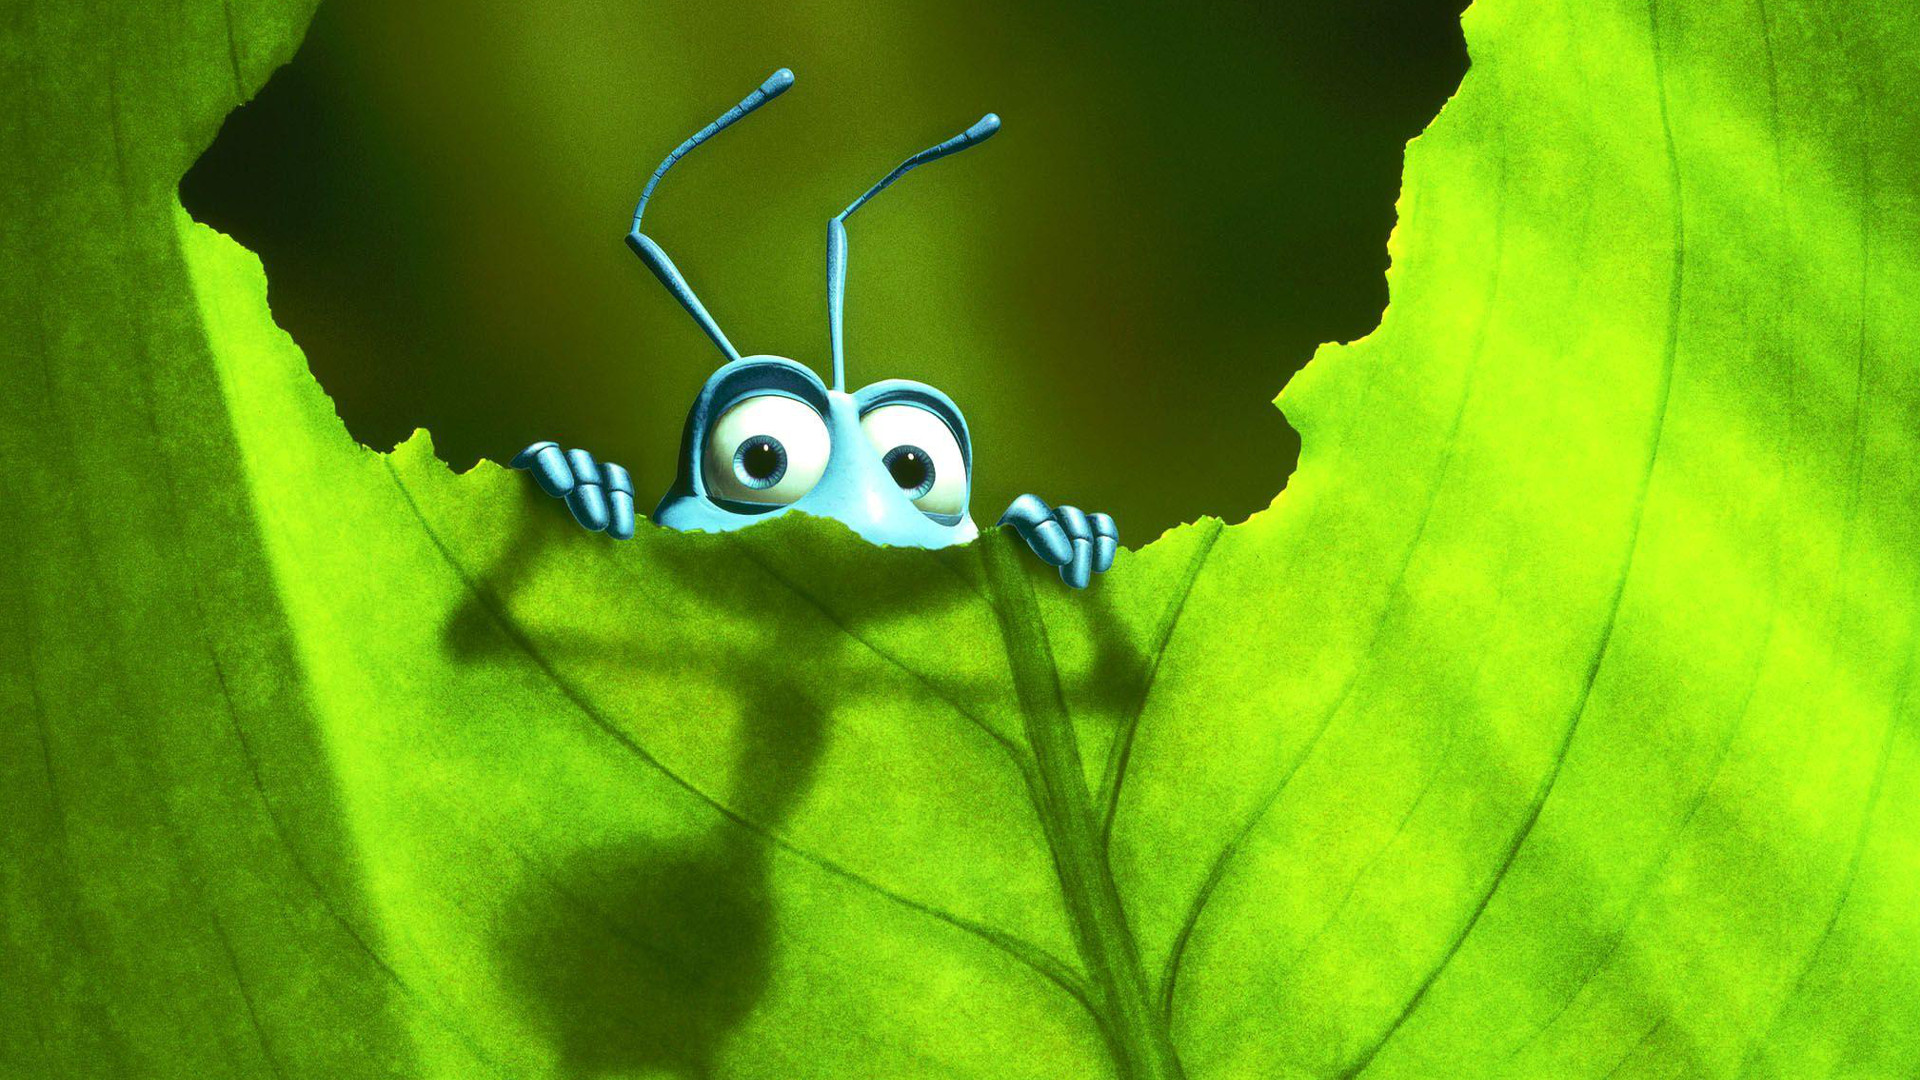 download wallpaper: a bugs life wallpaper